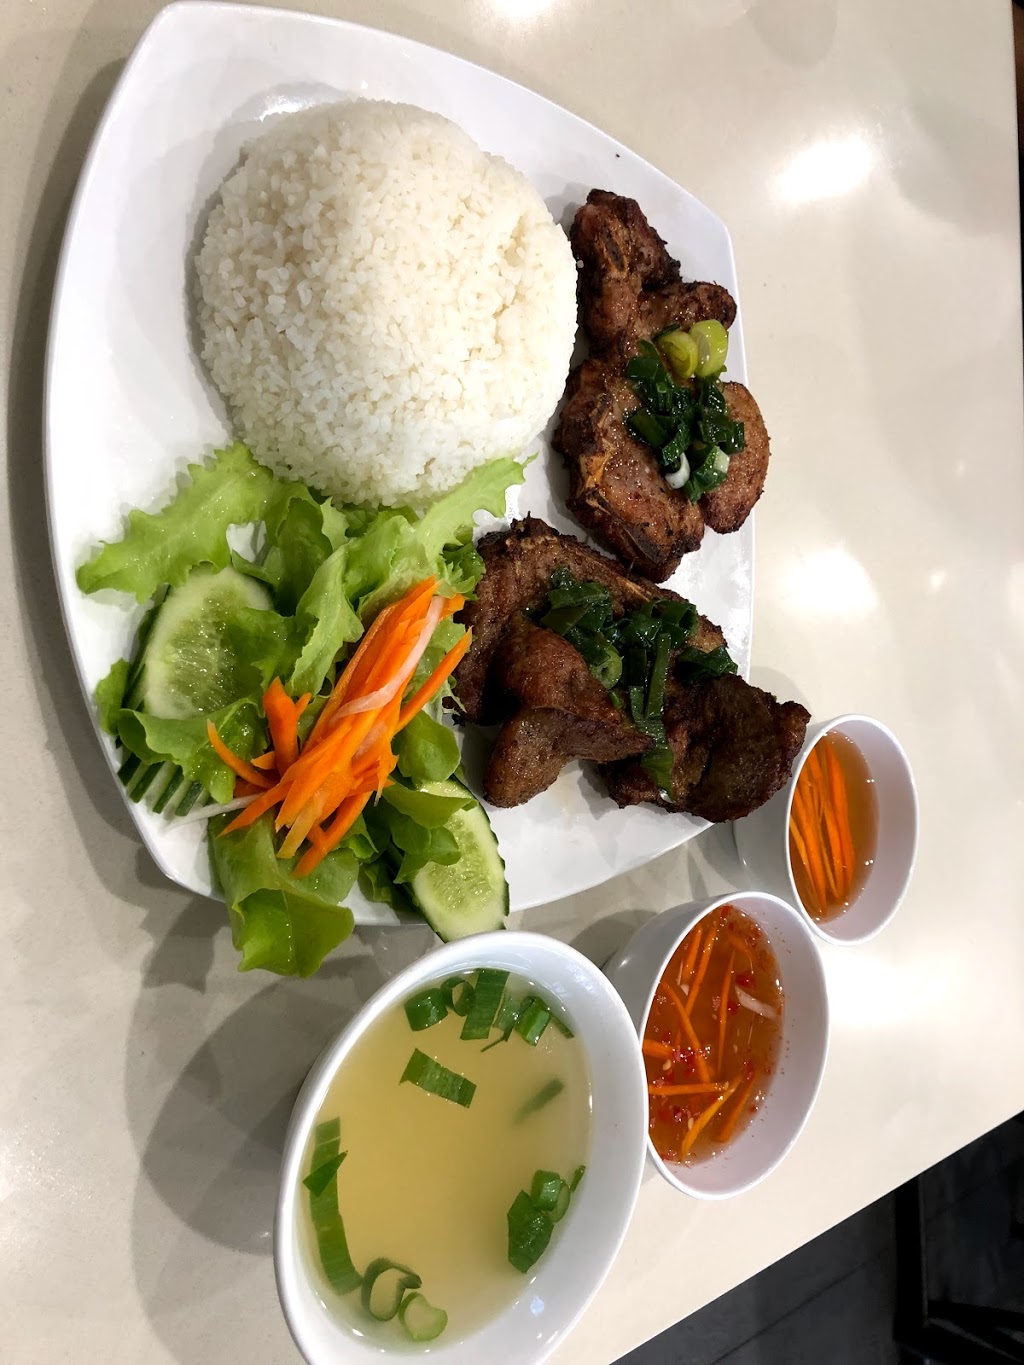 Tam Broken Rice Vietnamese Restaurant | Shop 2/32-34 Canley Vale Rd, Canley Vale NSW 2166, Australia | Phone: (02) 9727 2887